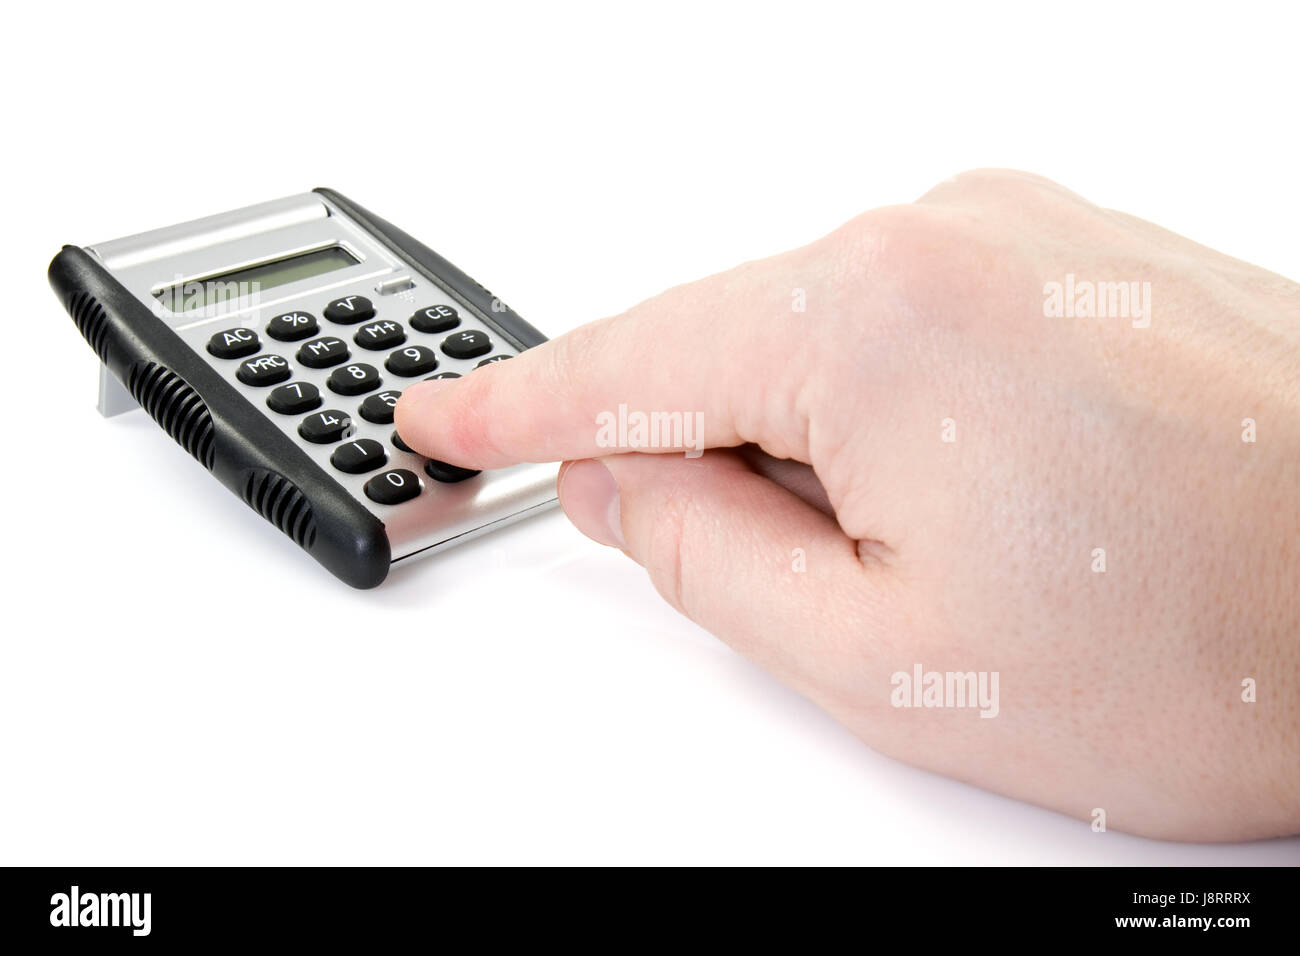 calculator, electronics, business dealings, deal, business transaction, Stock Photo